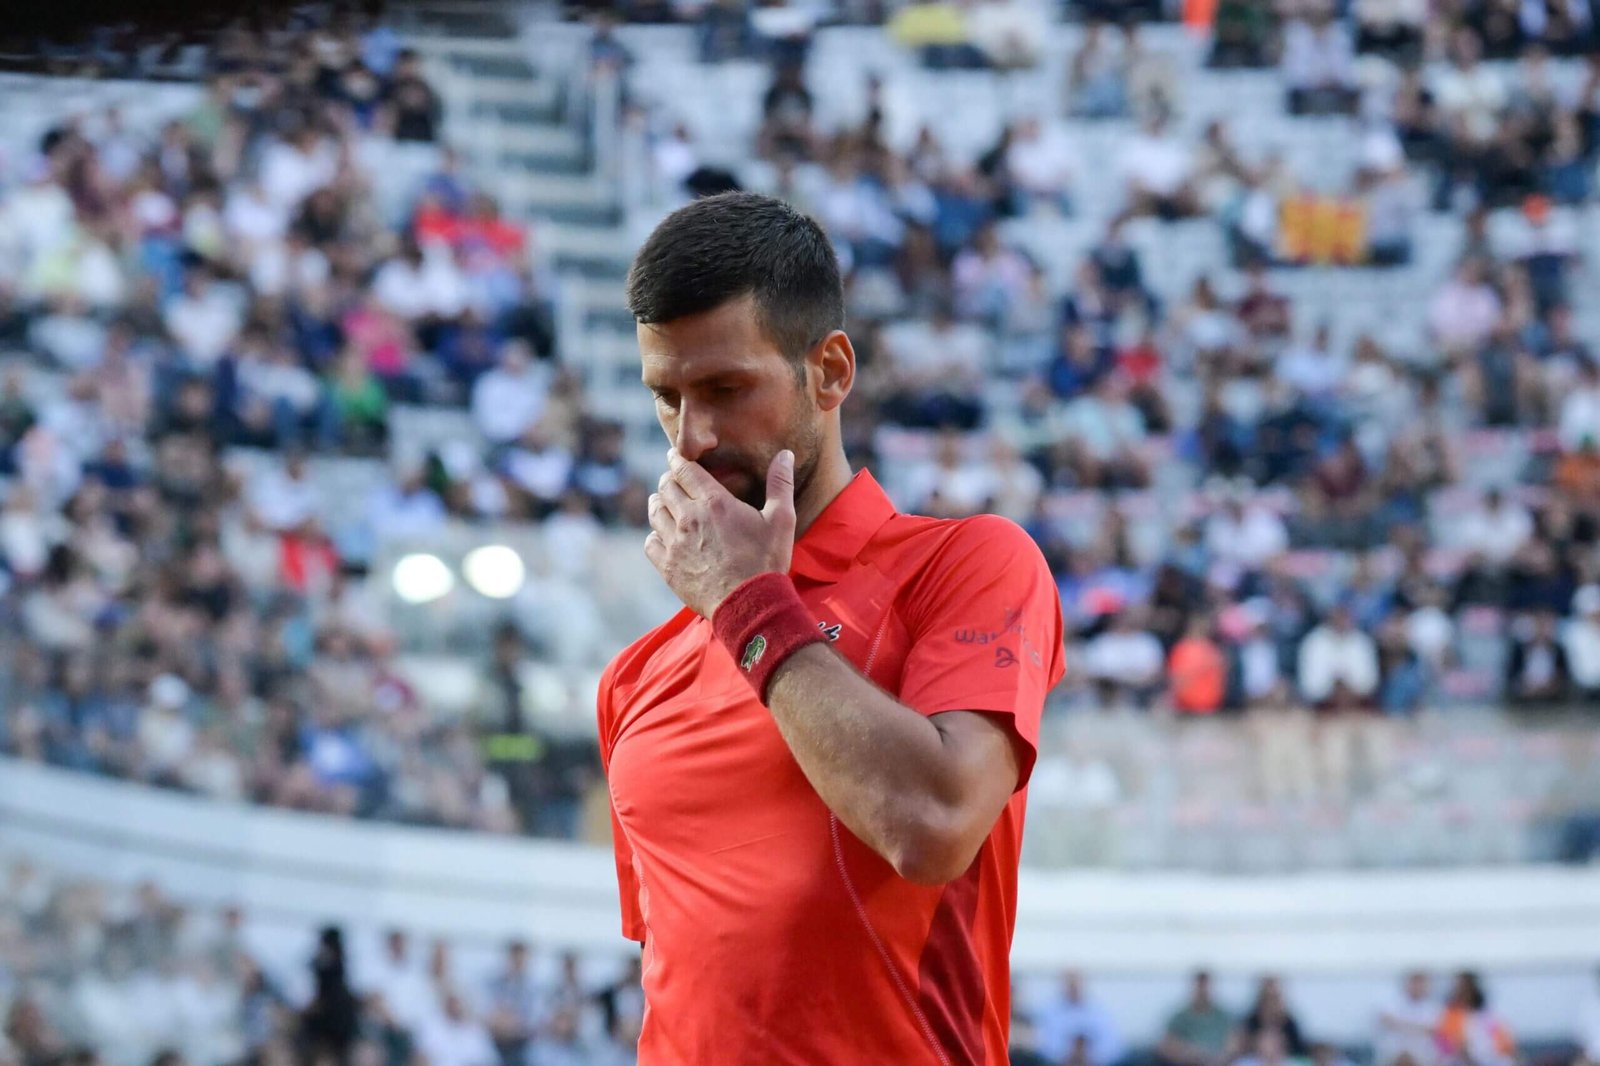 Novak Djokovic loses to Alejandro Tabilo in Rome after water bottle incident